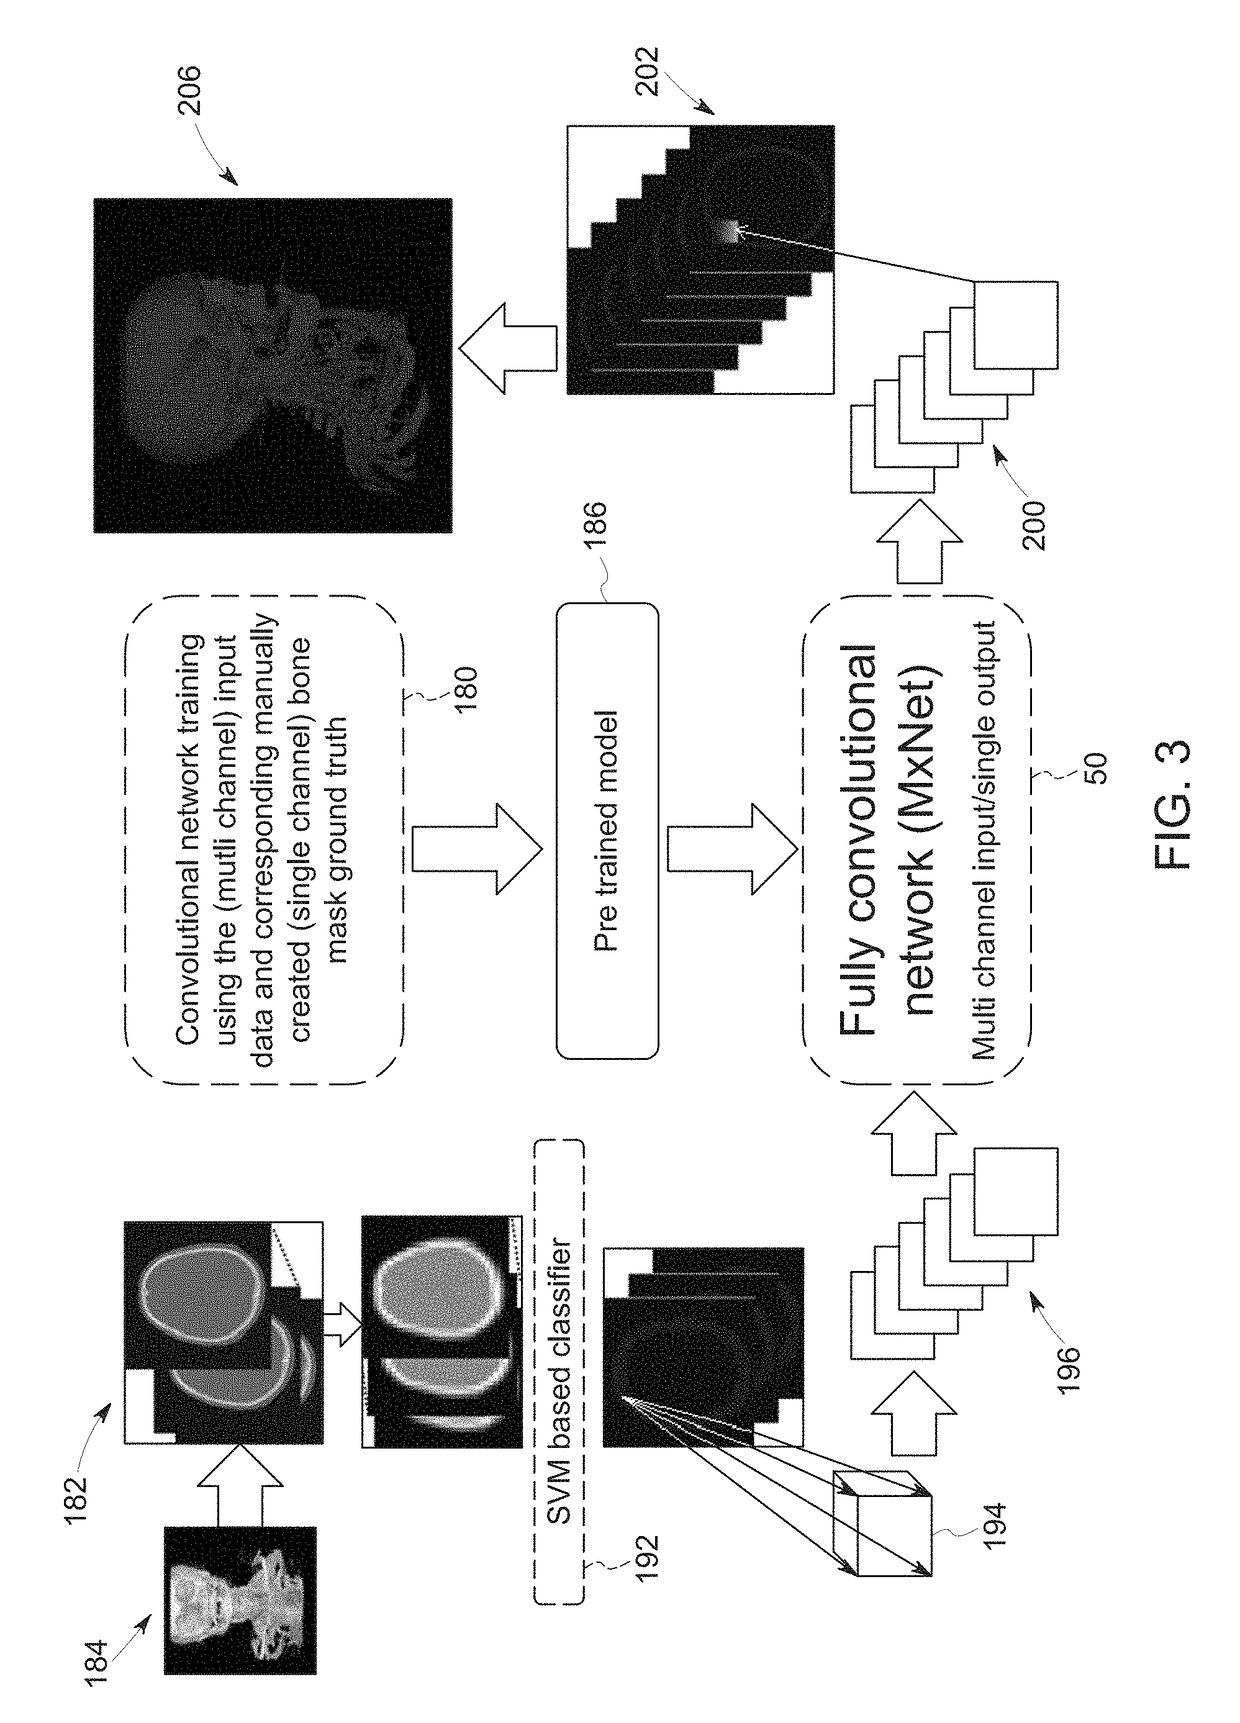 Material segmentation in image volumes